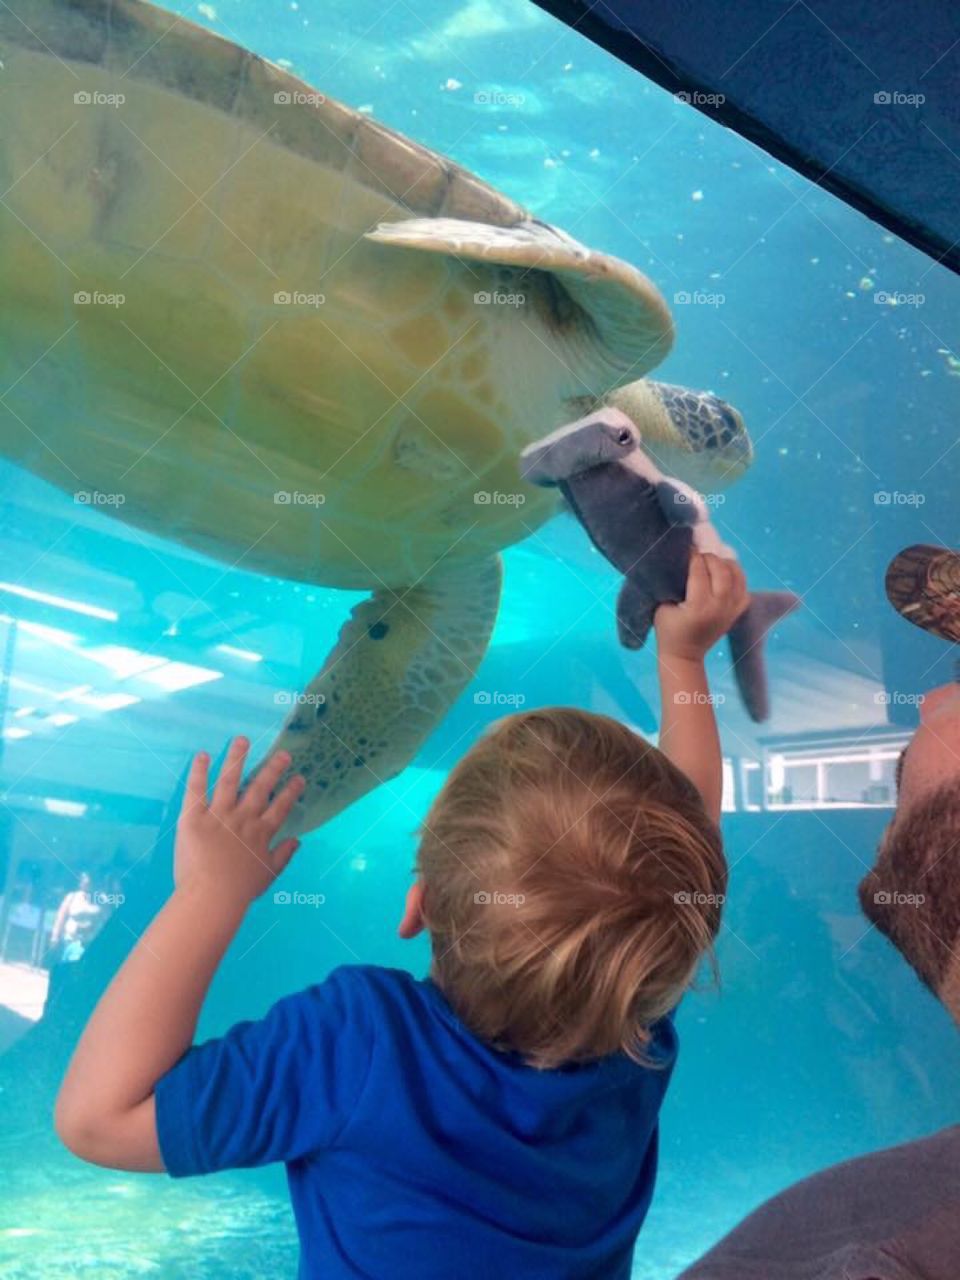 Hey Mr. Turtle, look at my shark!